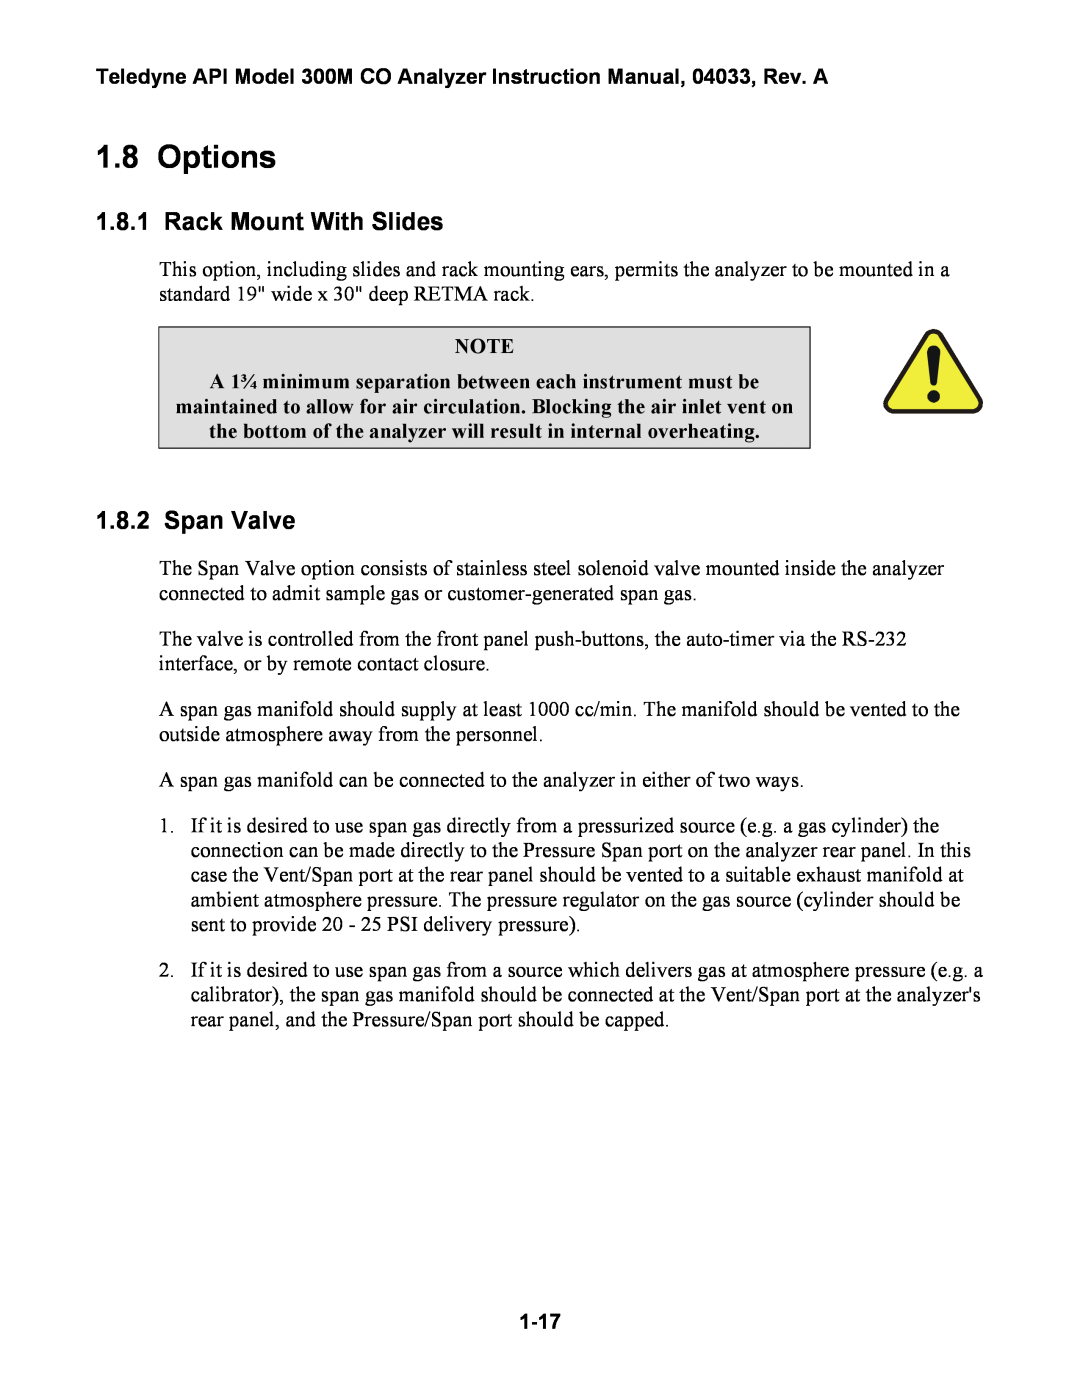 Teledyne 300M instruction manual Options, Rack Mount With Slides, Span Valve, 1-17 